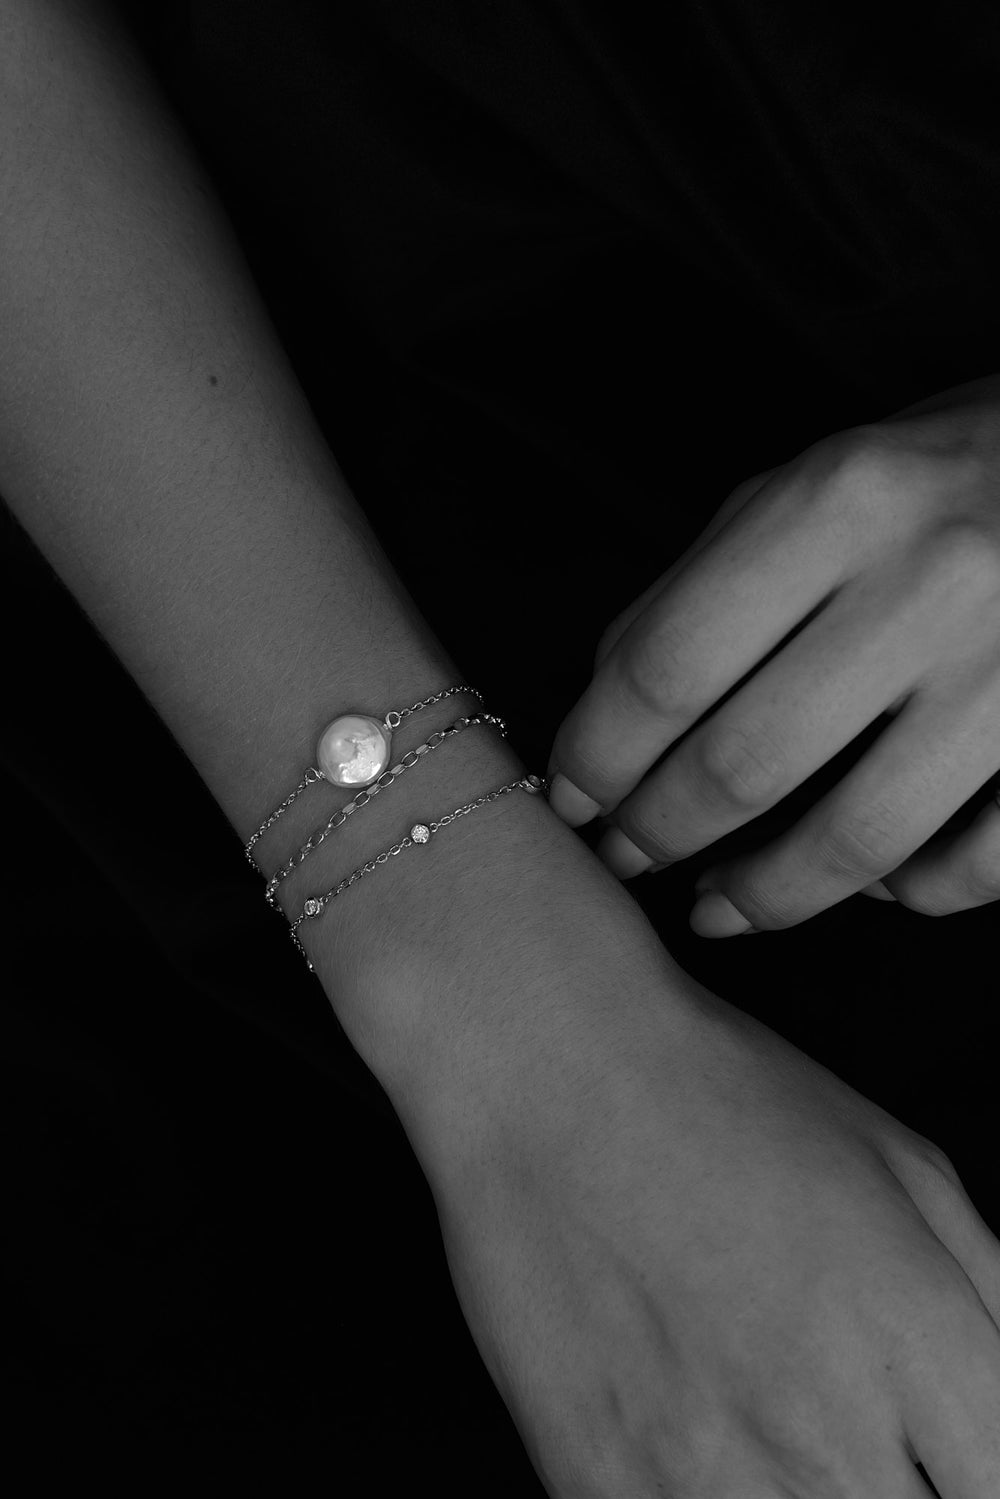 Baroque Pearl Bracelet | Silver| Natasha Schweitzer